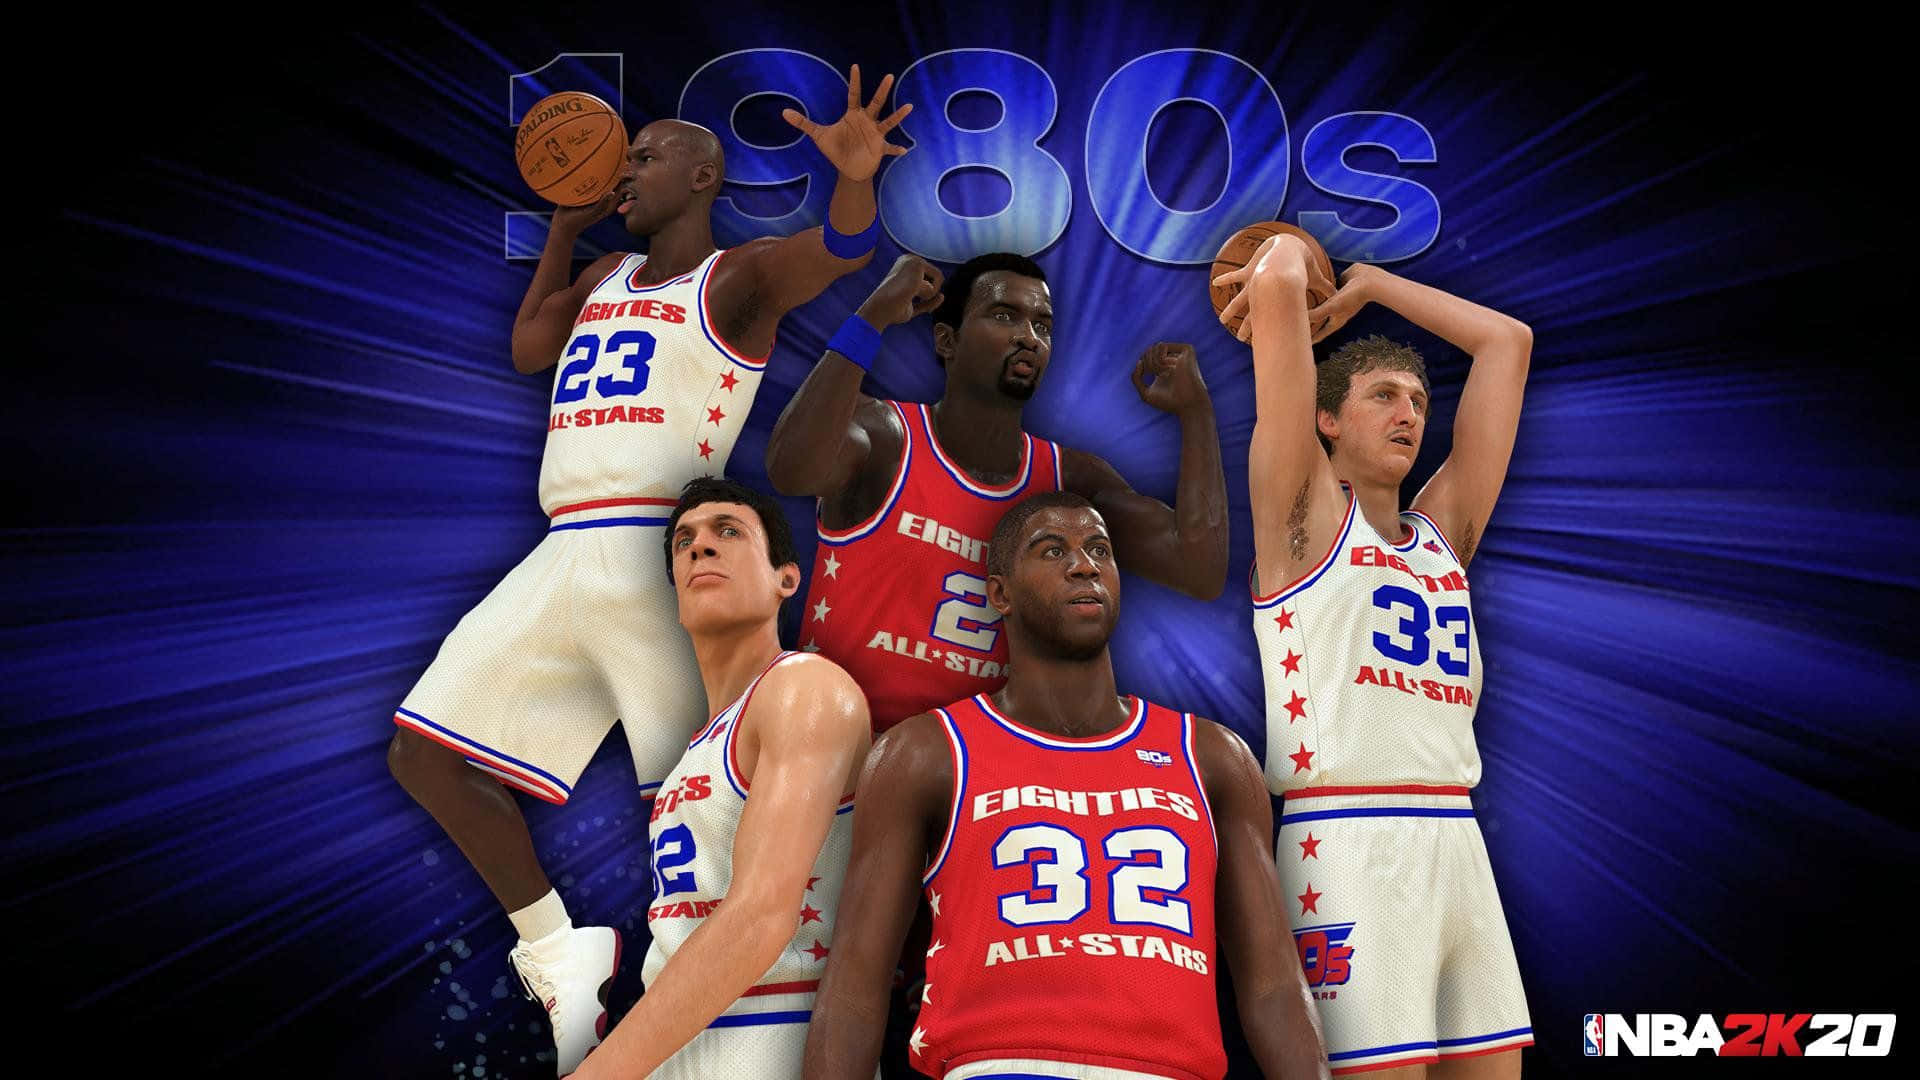 NBA 2K20 Virtual Basketball Action Wallpaper